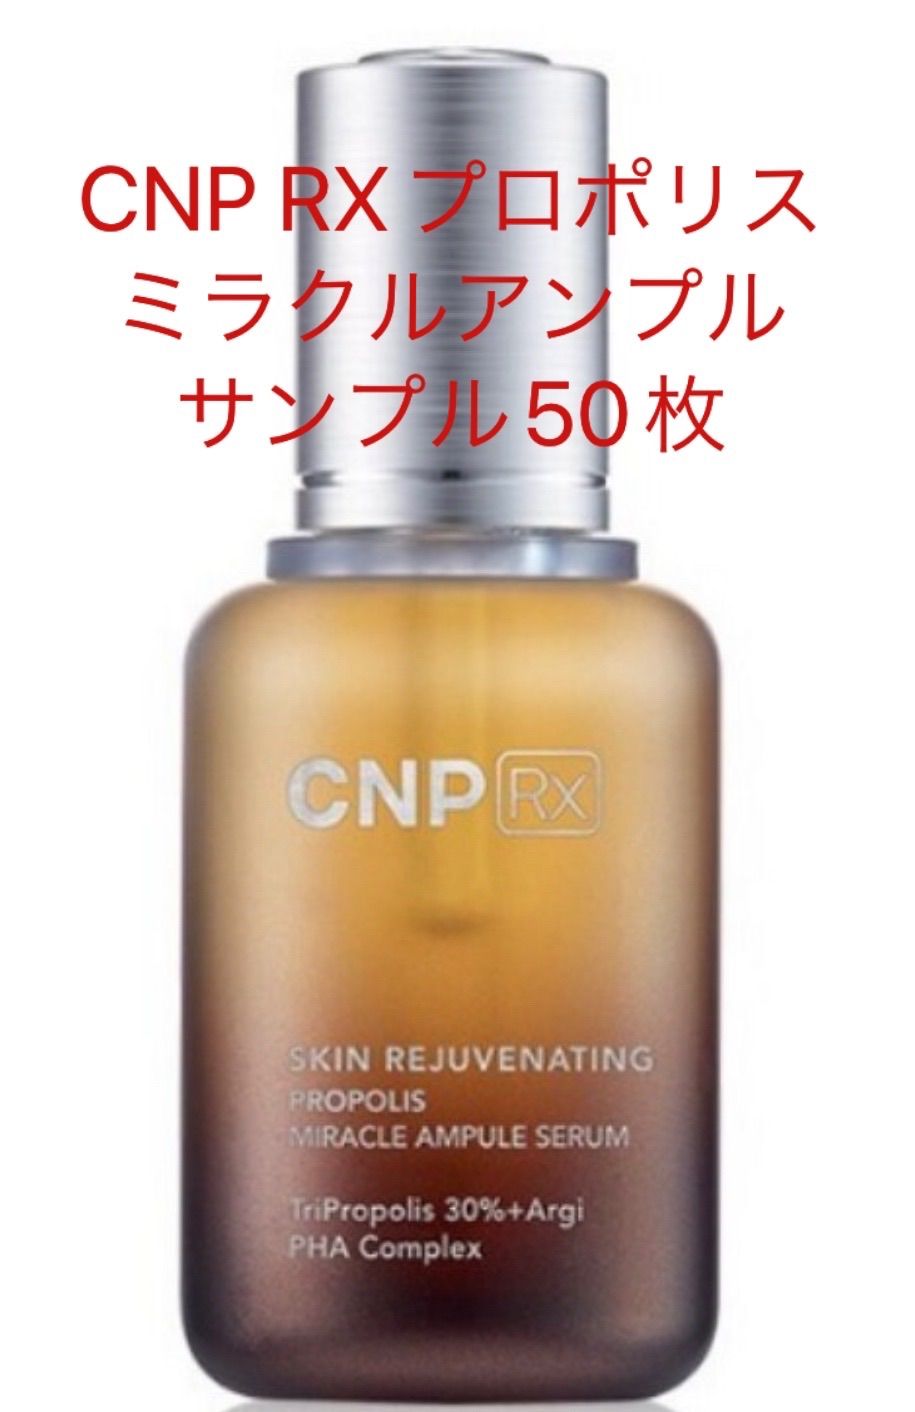 CNP RX プロポリス ミラクル アンプル セラム 1ml ×30 通販